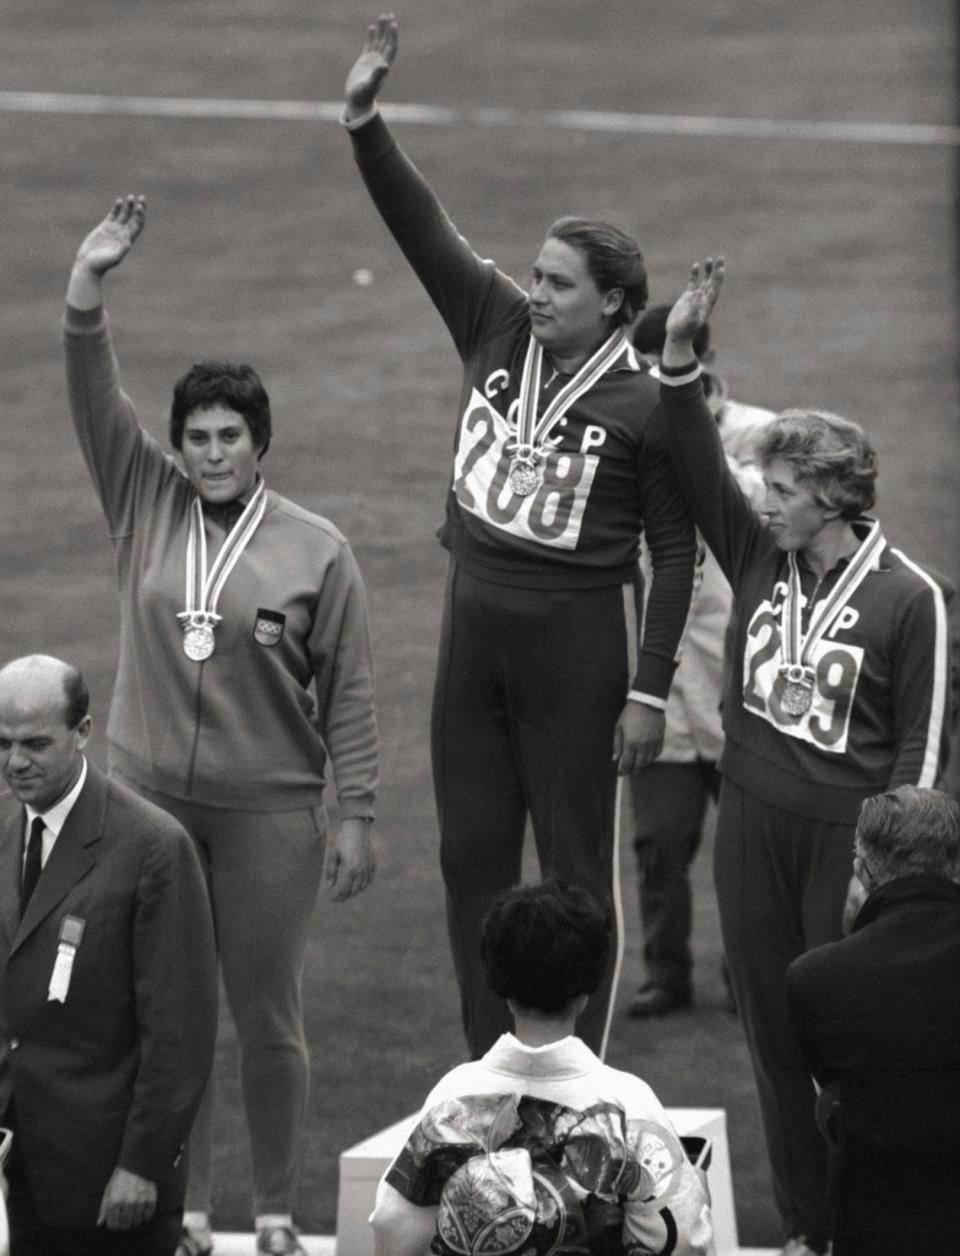 On the Olympic podium in 1964 - Walter Mori/Mondadori via Getty Images